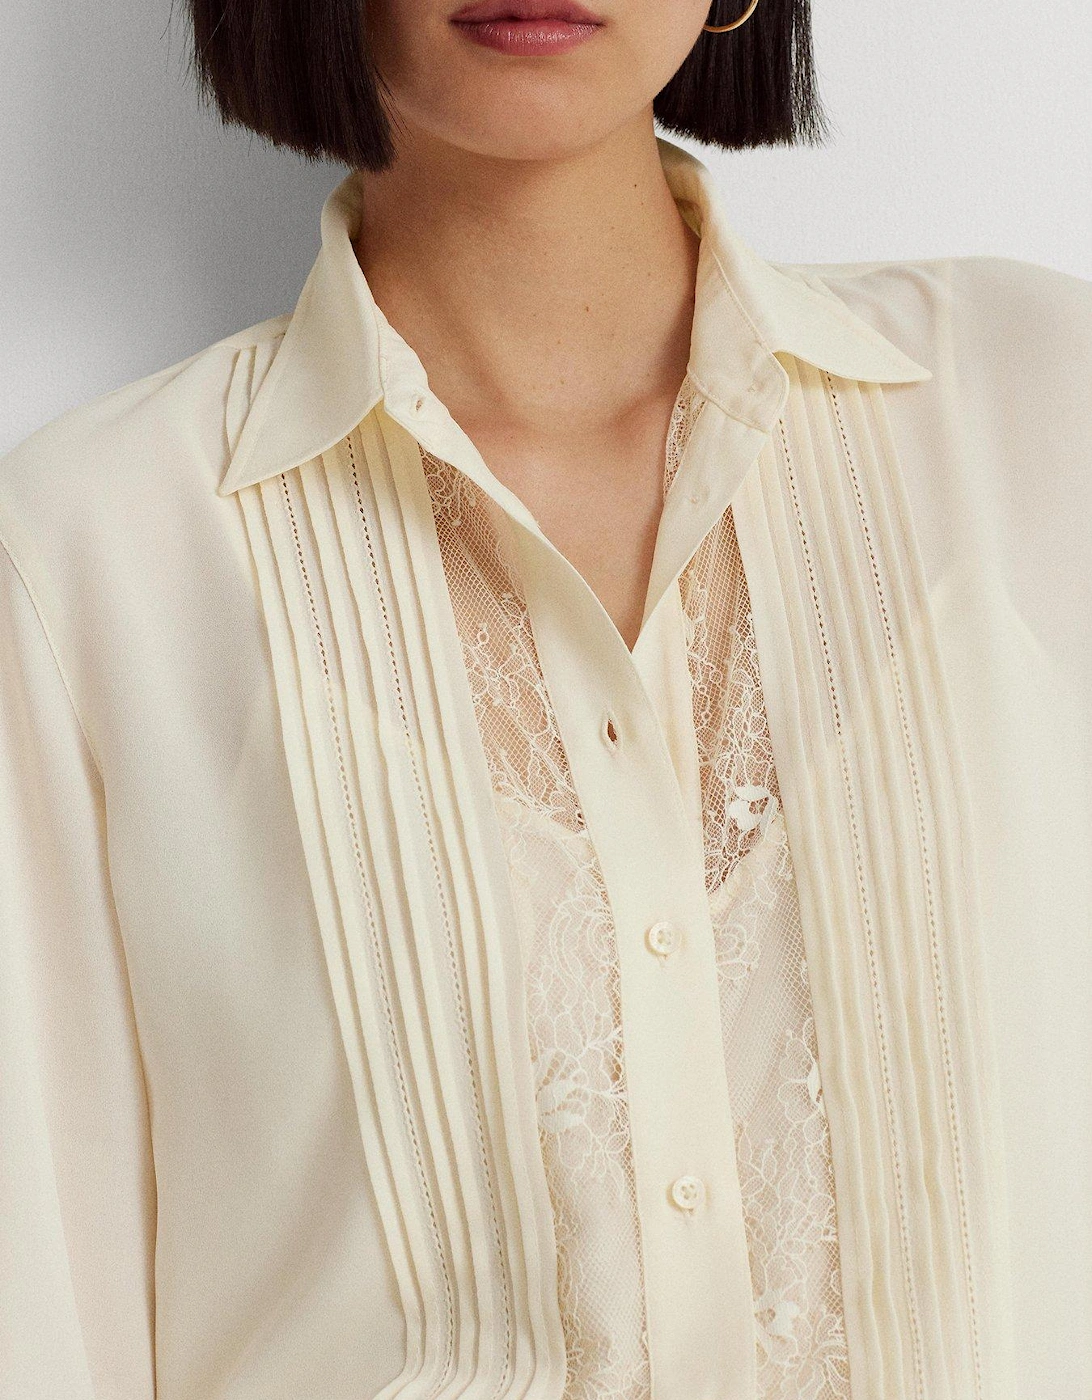 Lalort-long Sleeve-button Front Shirt - Mascarpone Cream